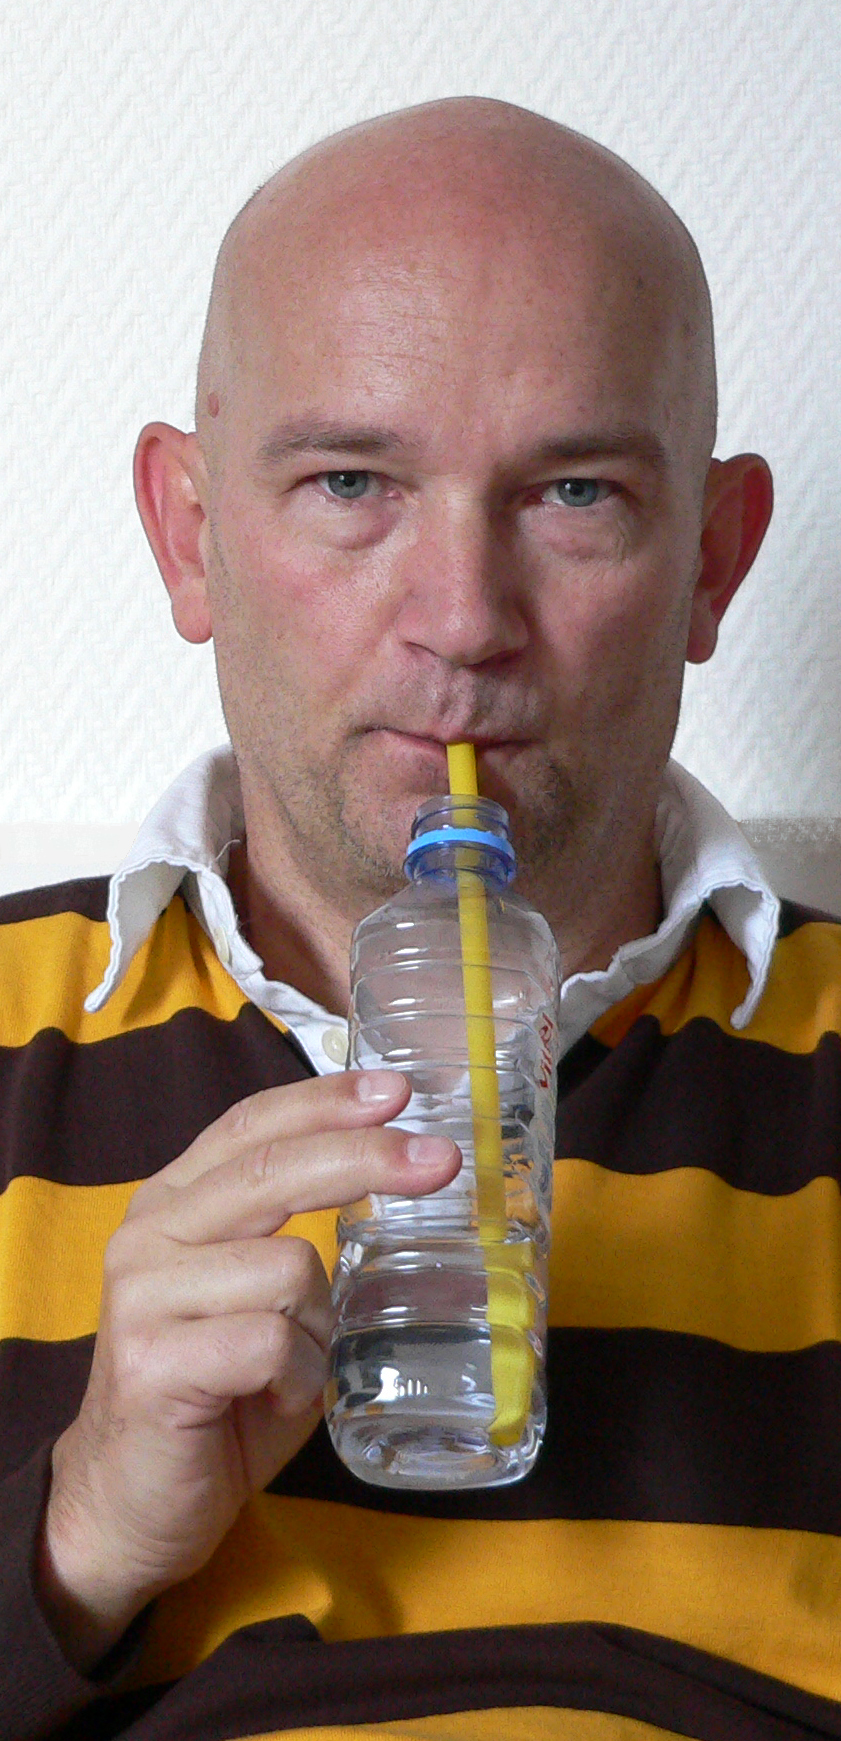 Drinking straw - Wikipedia